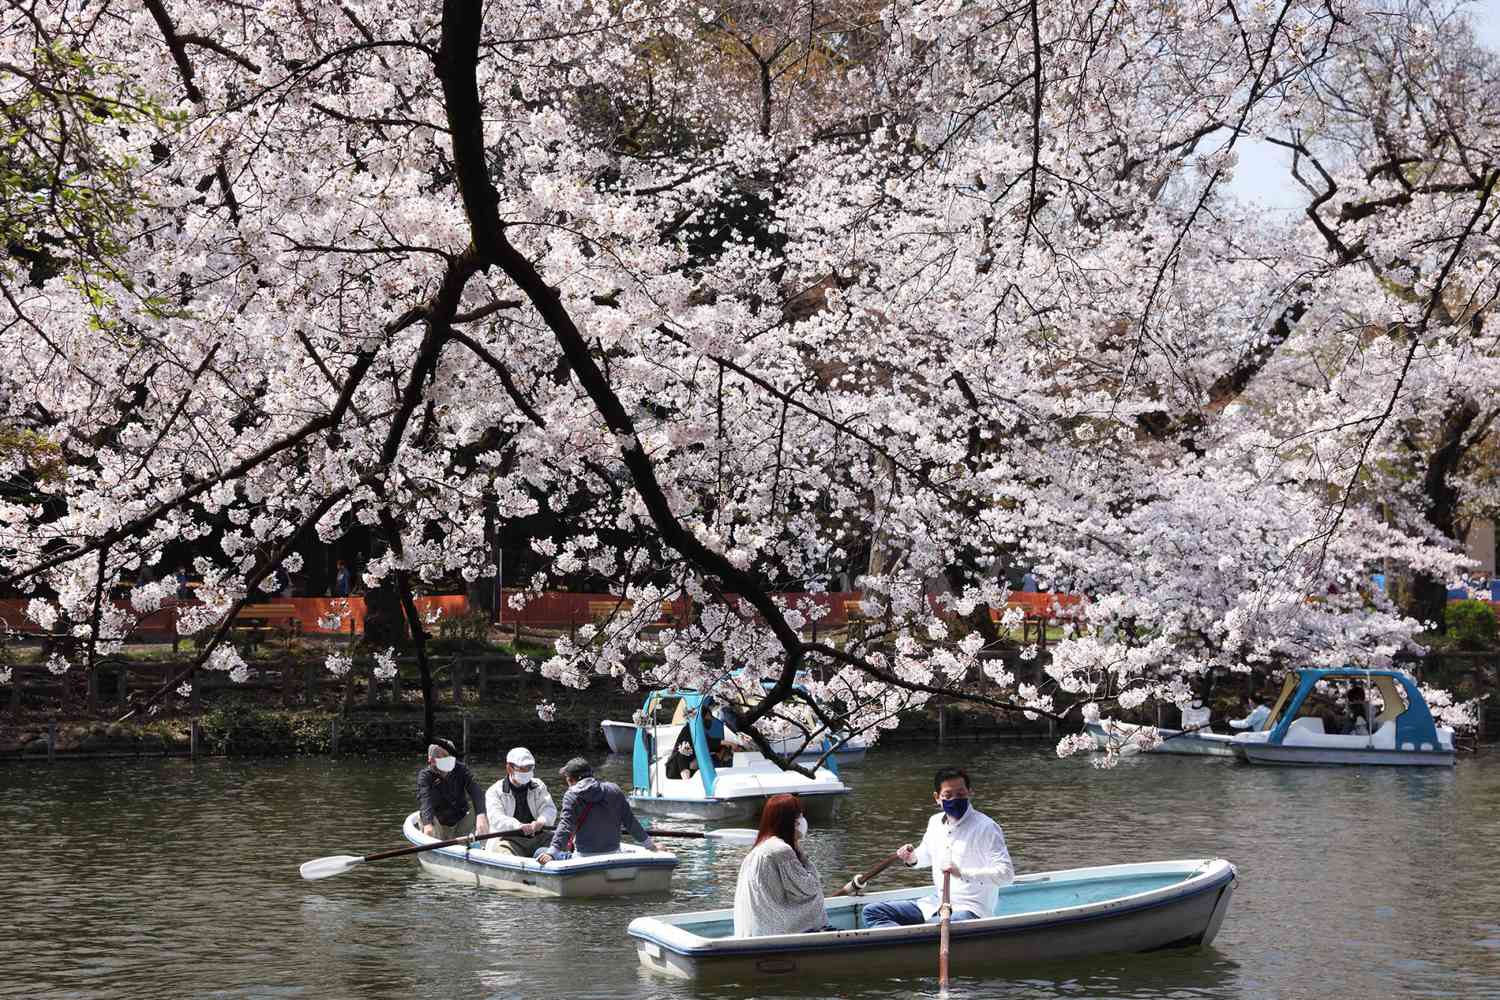 Visitors of Inokashira Park enjoy boating during Cherry blossom